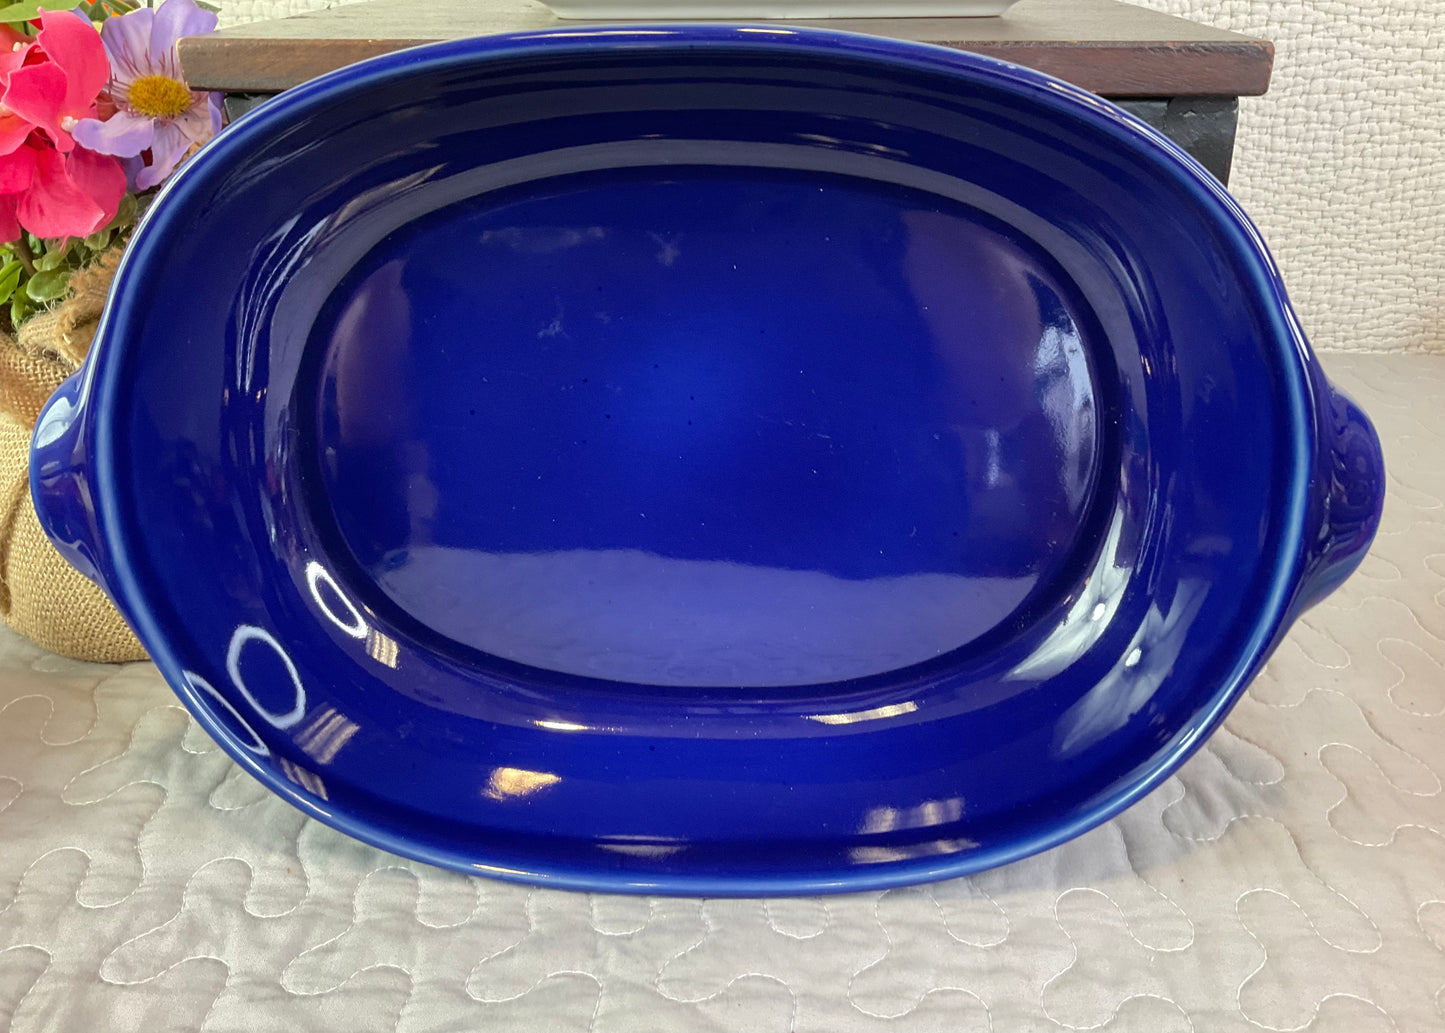 Mixcer Blue Oval Stoneware Baking Dish, 12"x9"